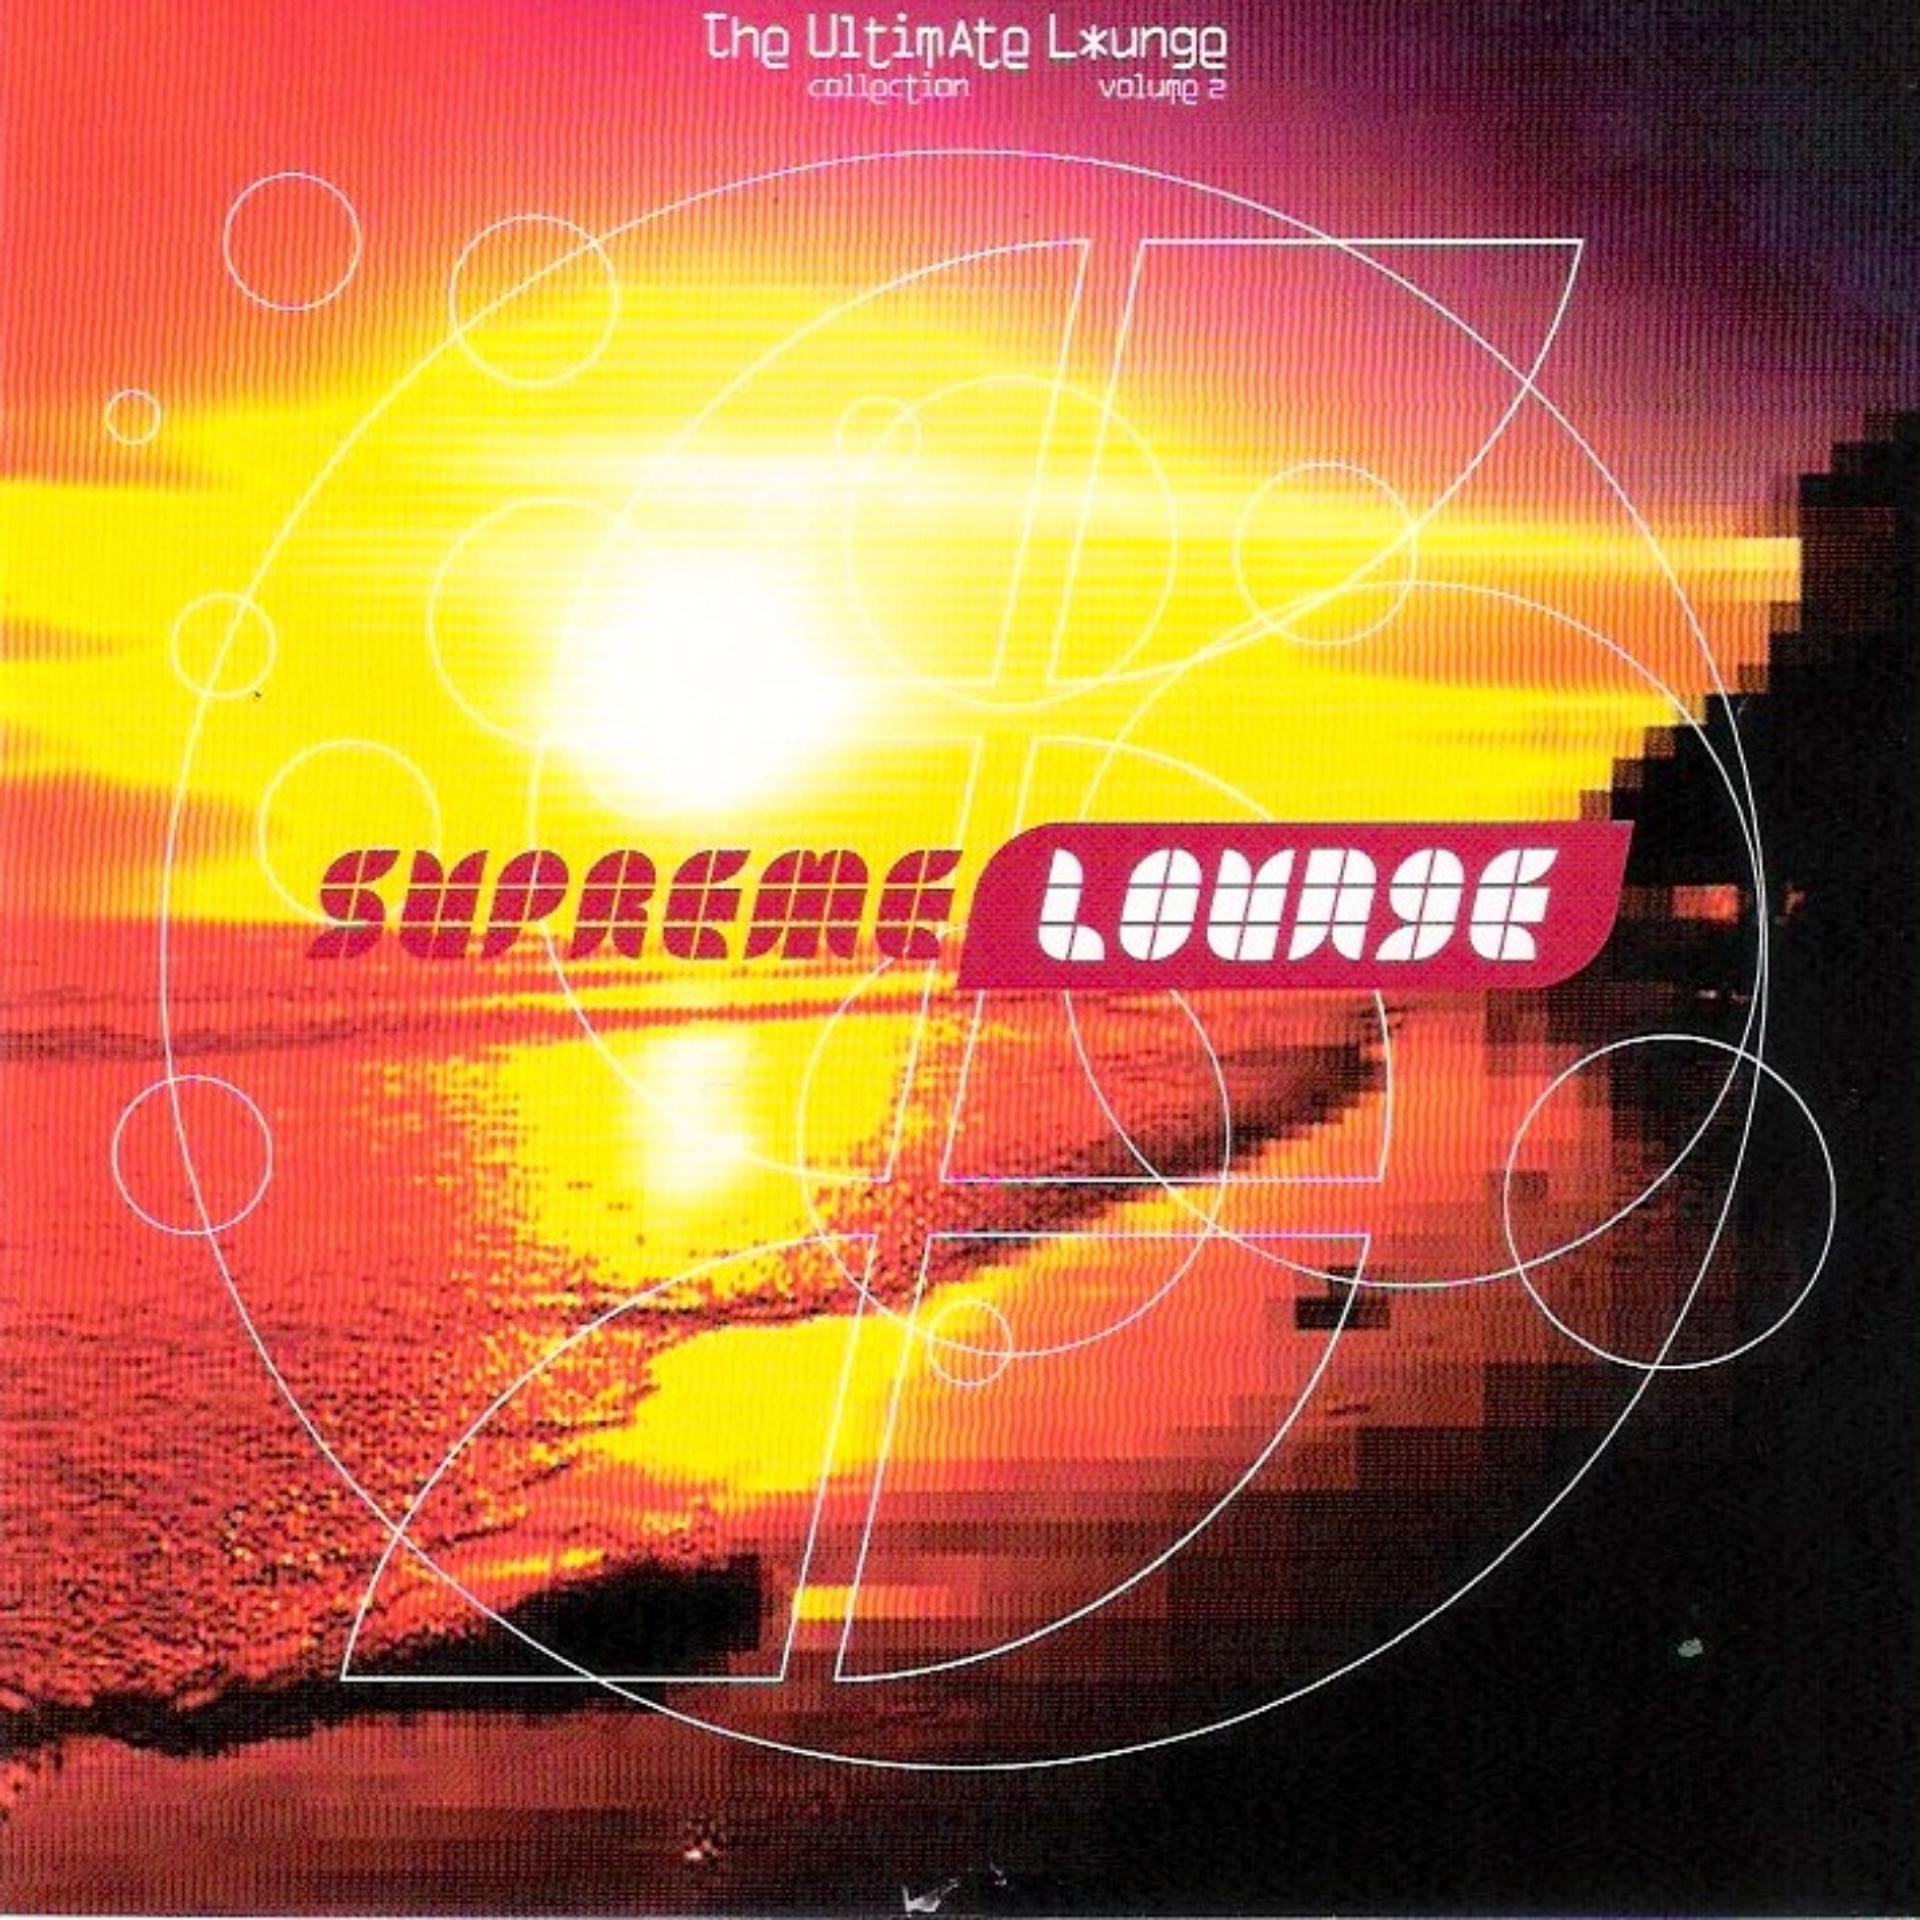 Постер альбома Supreme Lounge